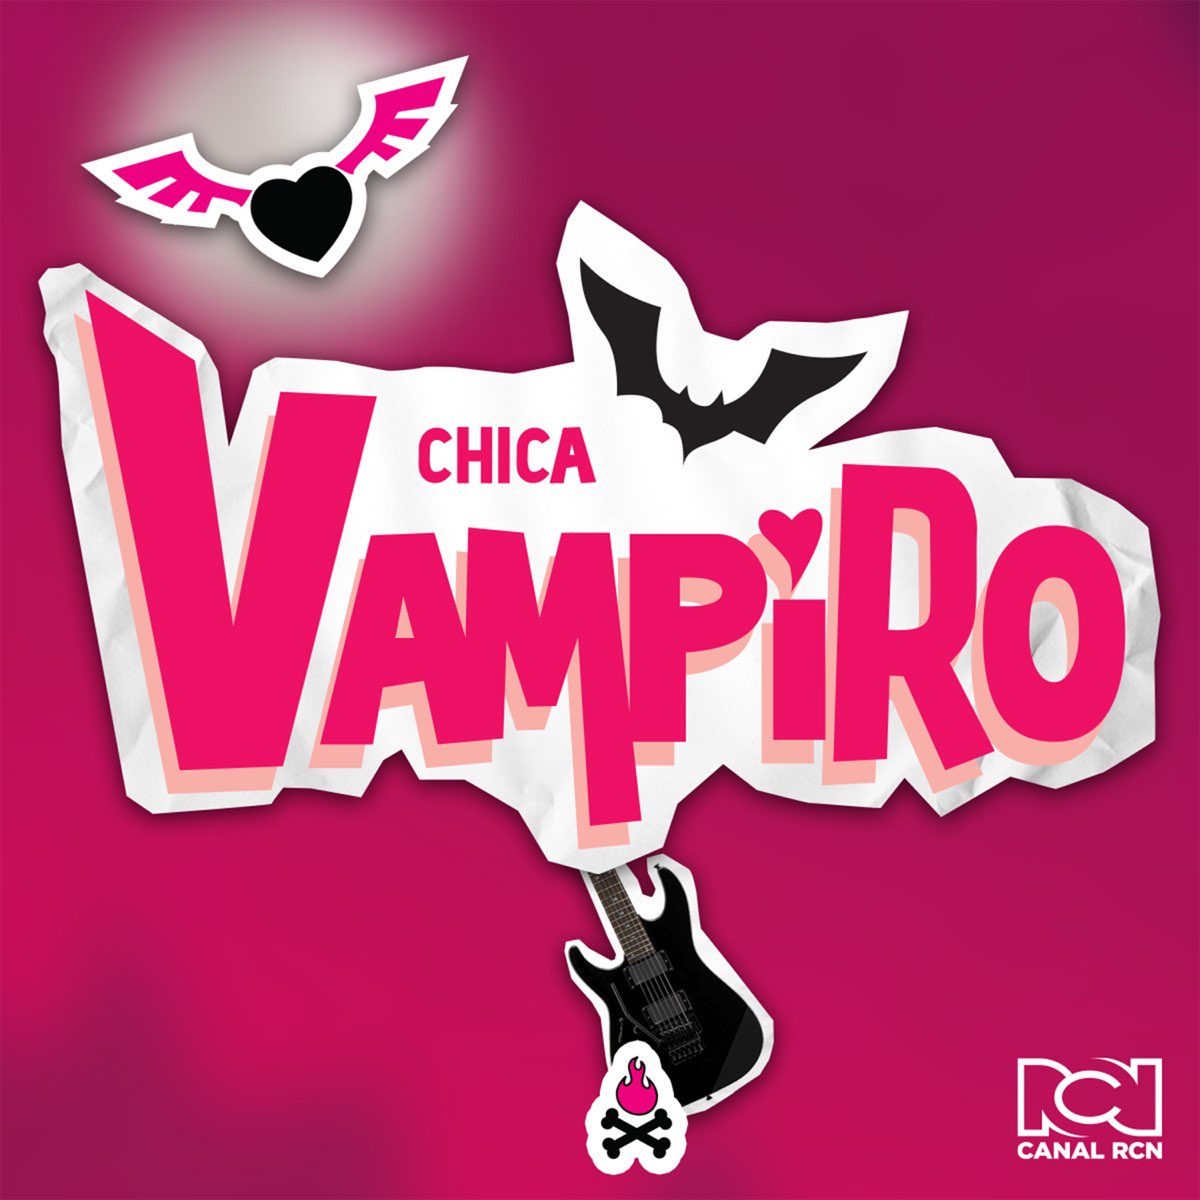 CHICA VAMPIRO - Album by Canal RCN - Apple Music